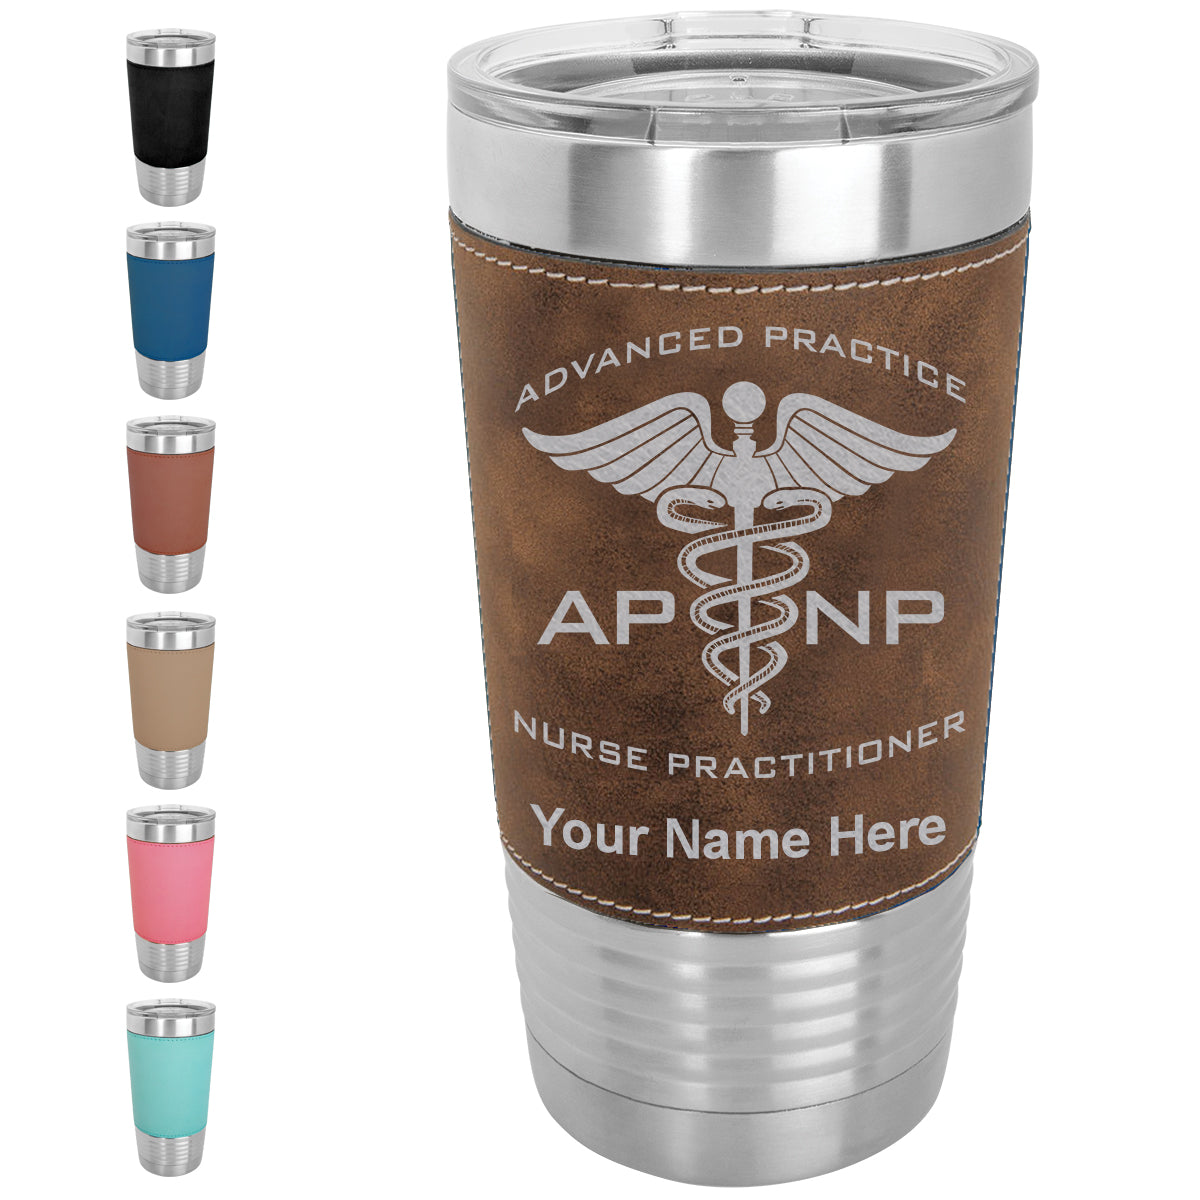 20oz Faux Leather Tumbler Mug, APNP Advanced Practice Nurse Practitioner, Personalized Engraving Included - LaserGram Custom Engraved Gifts